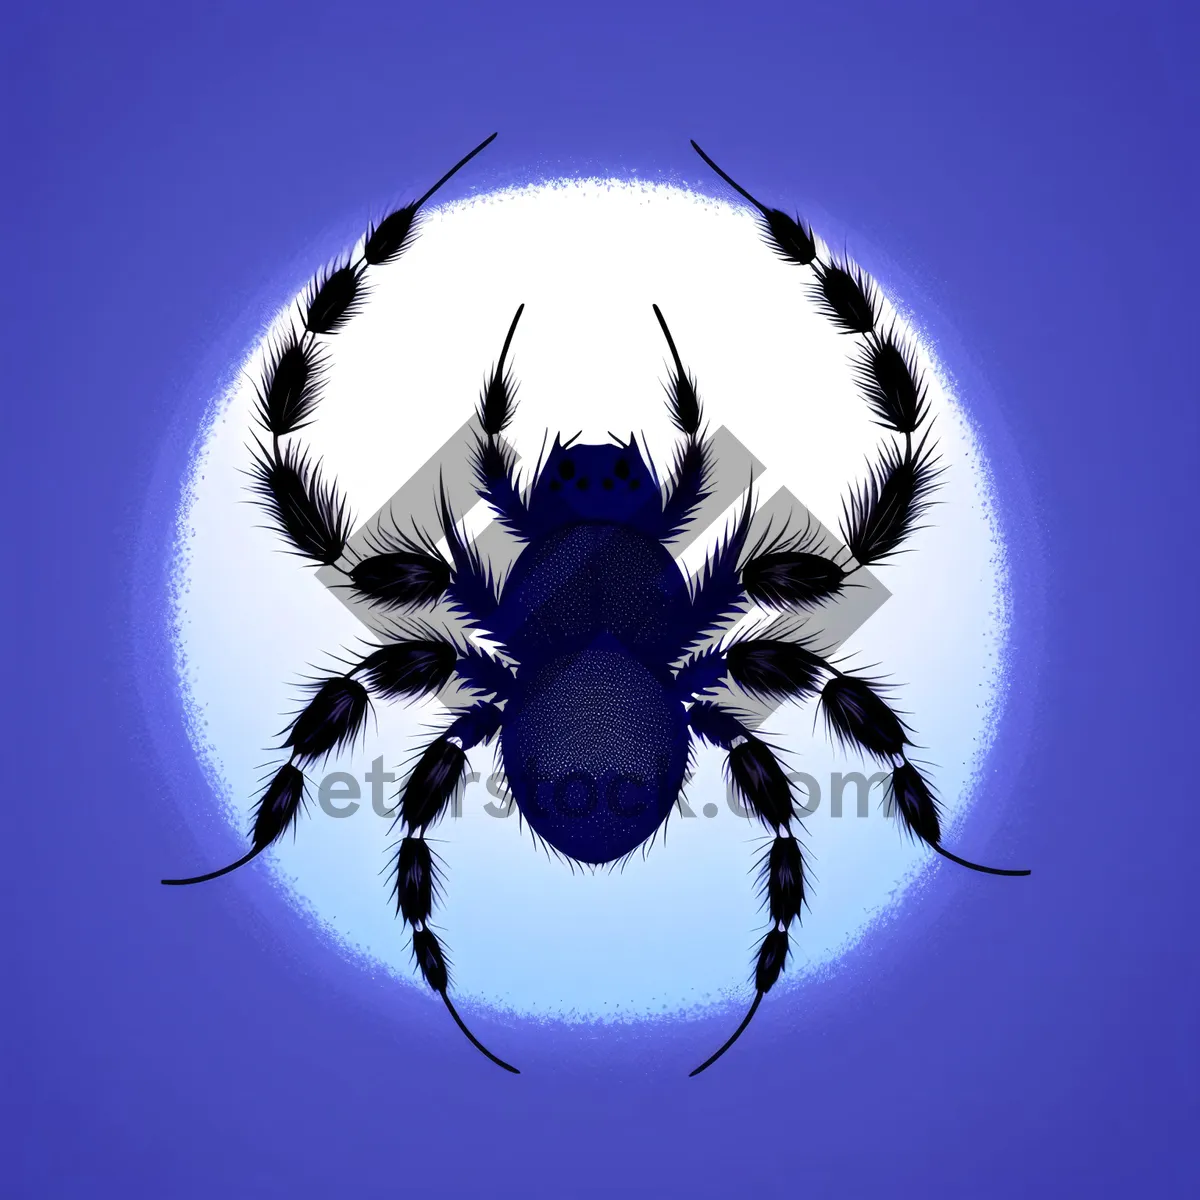 Picture of Arachnid Close-Up: Black Barn Spider, Tick